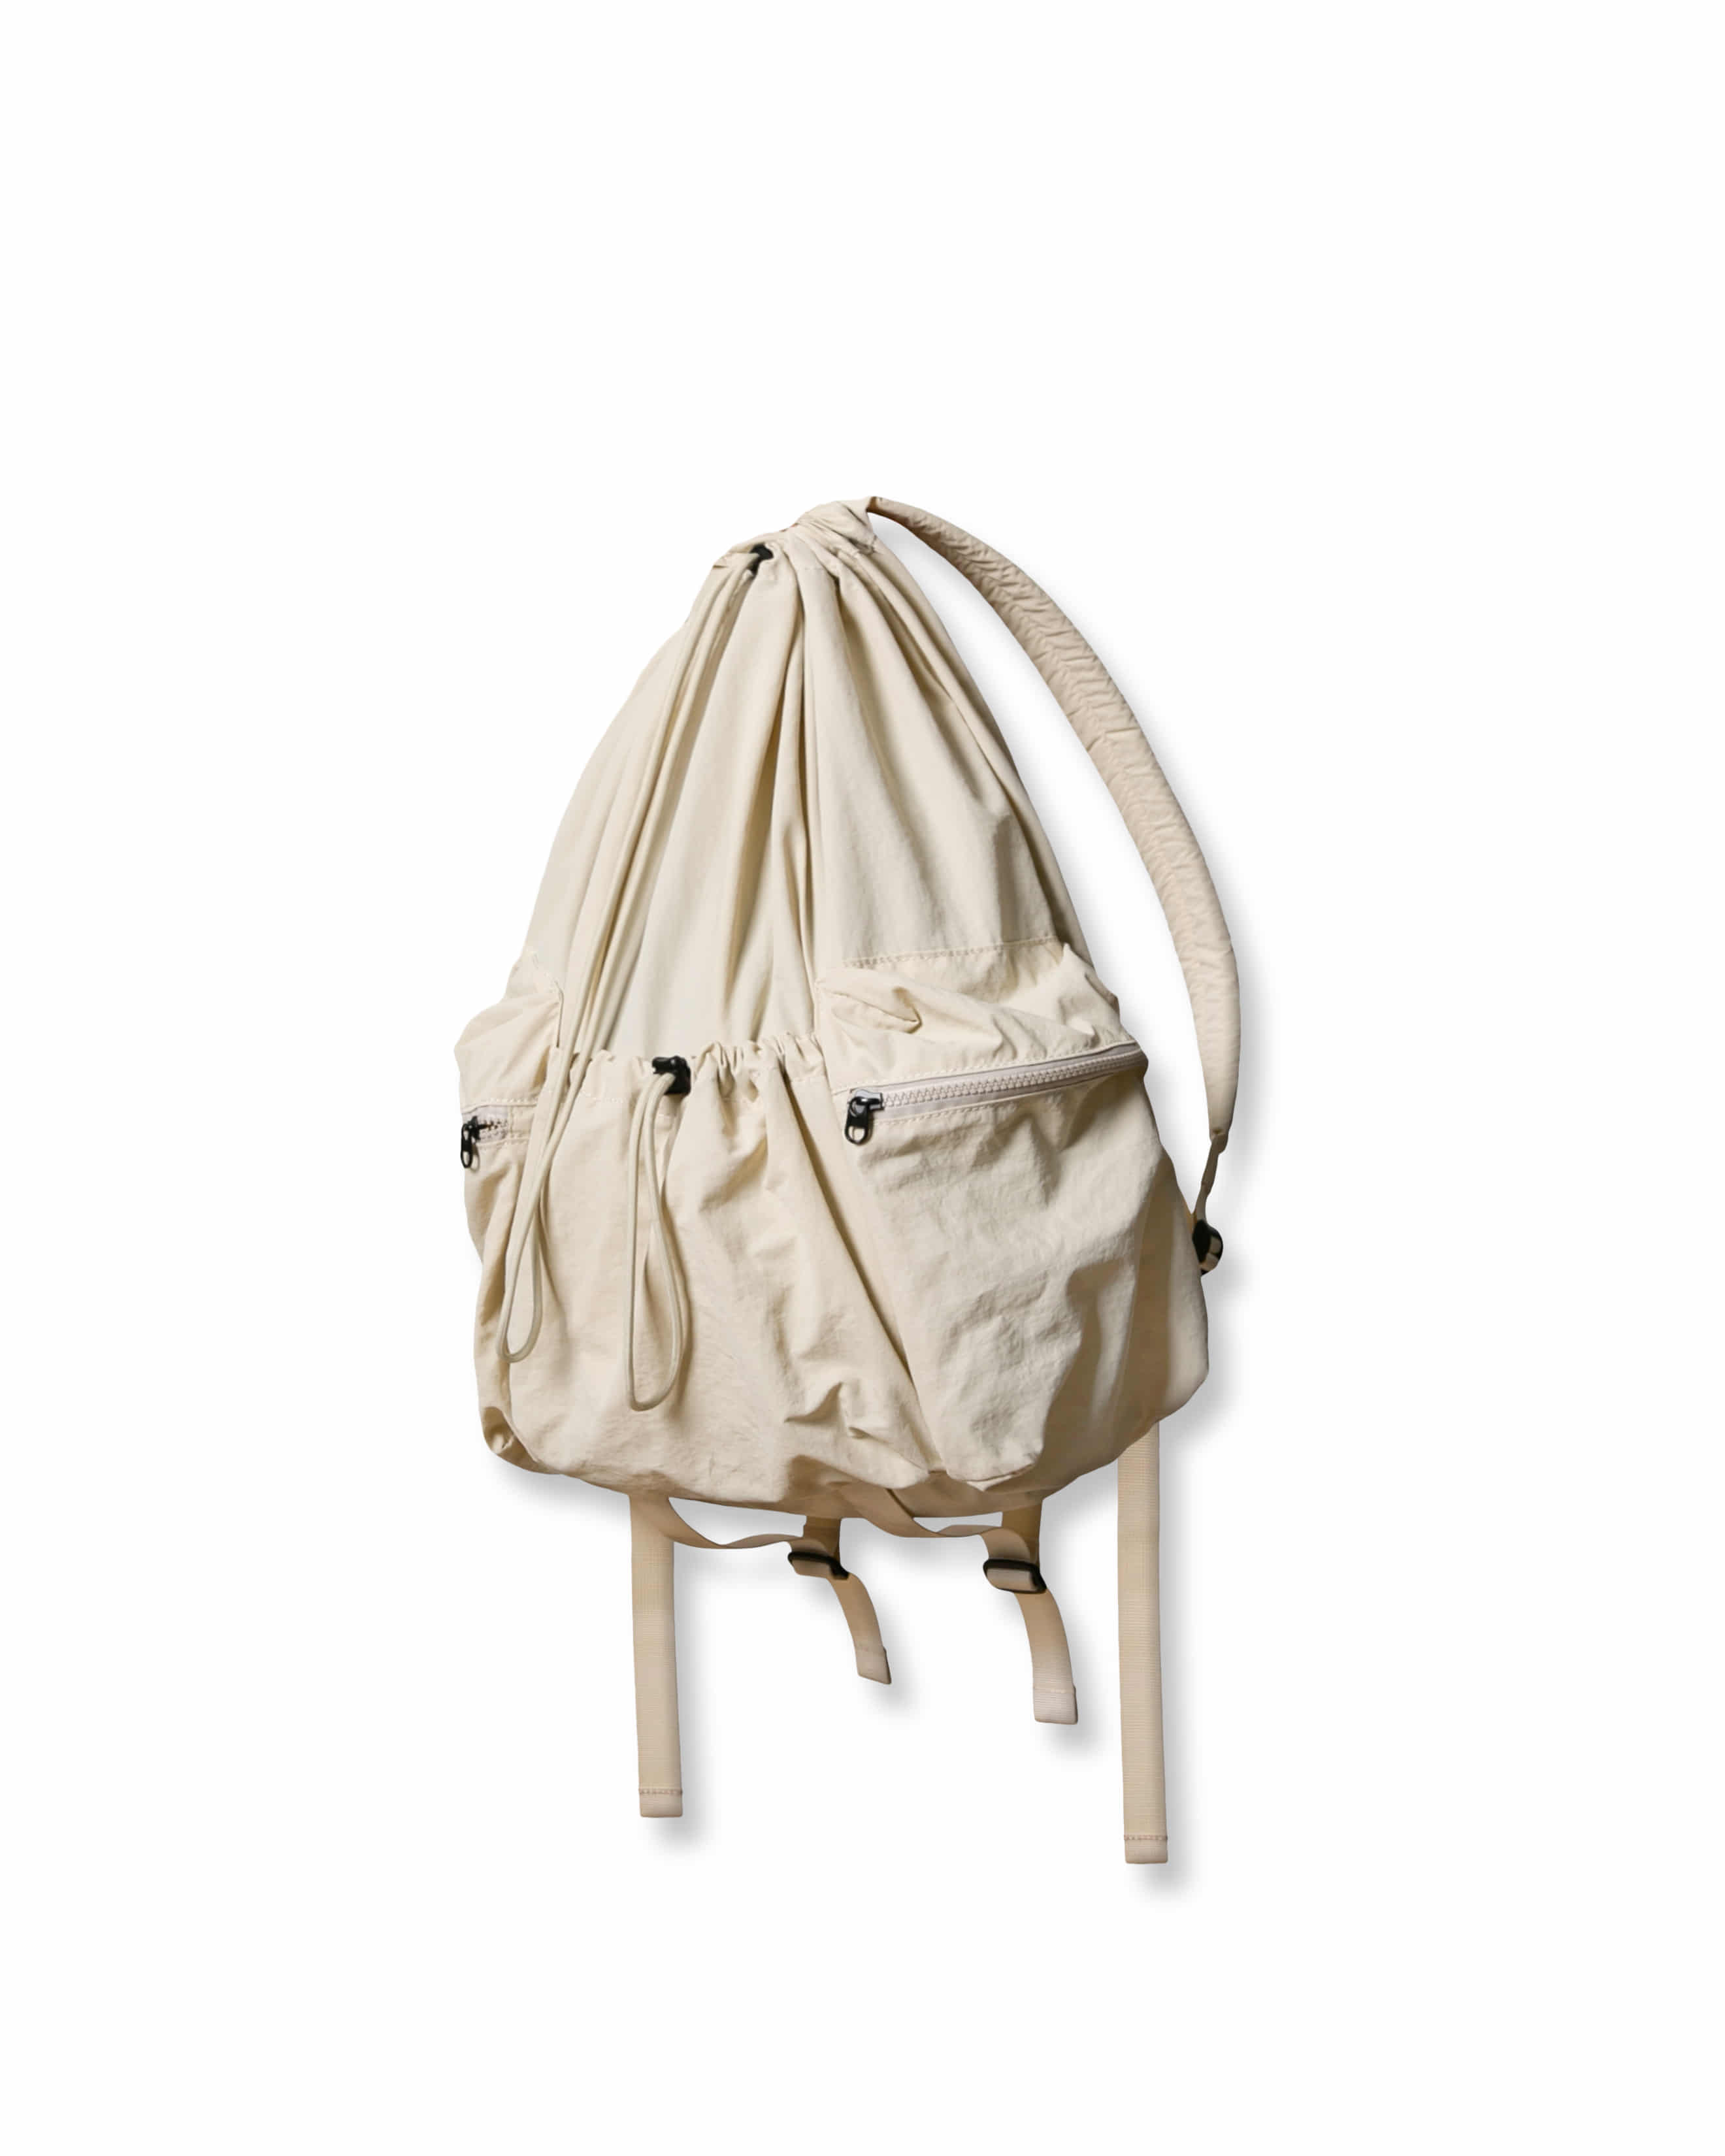 String Cargo Ruck Sack Backpack - Ivory